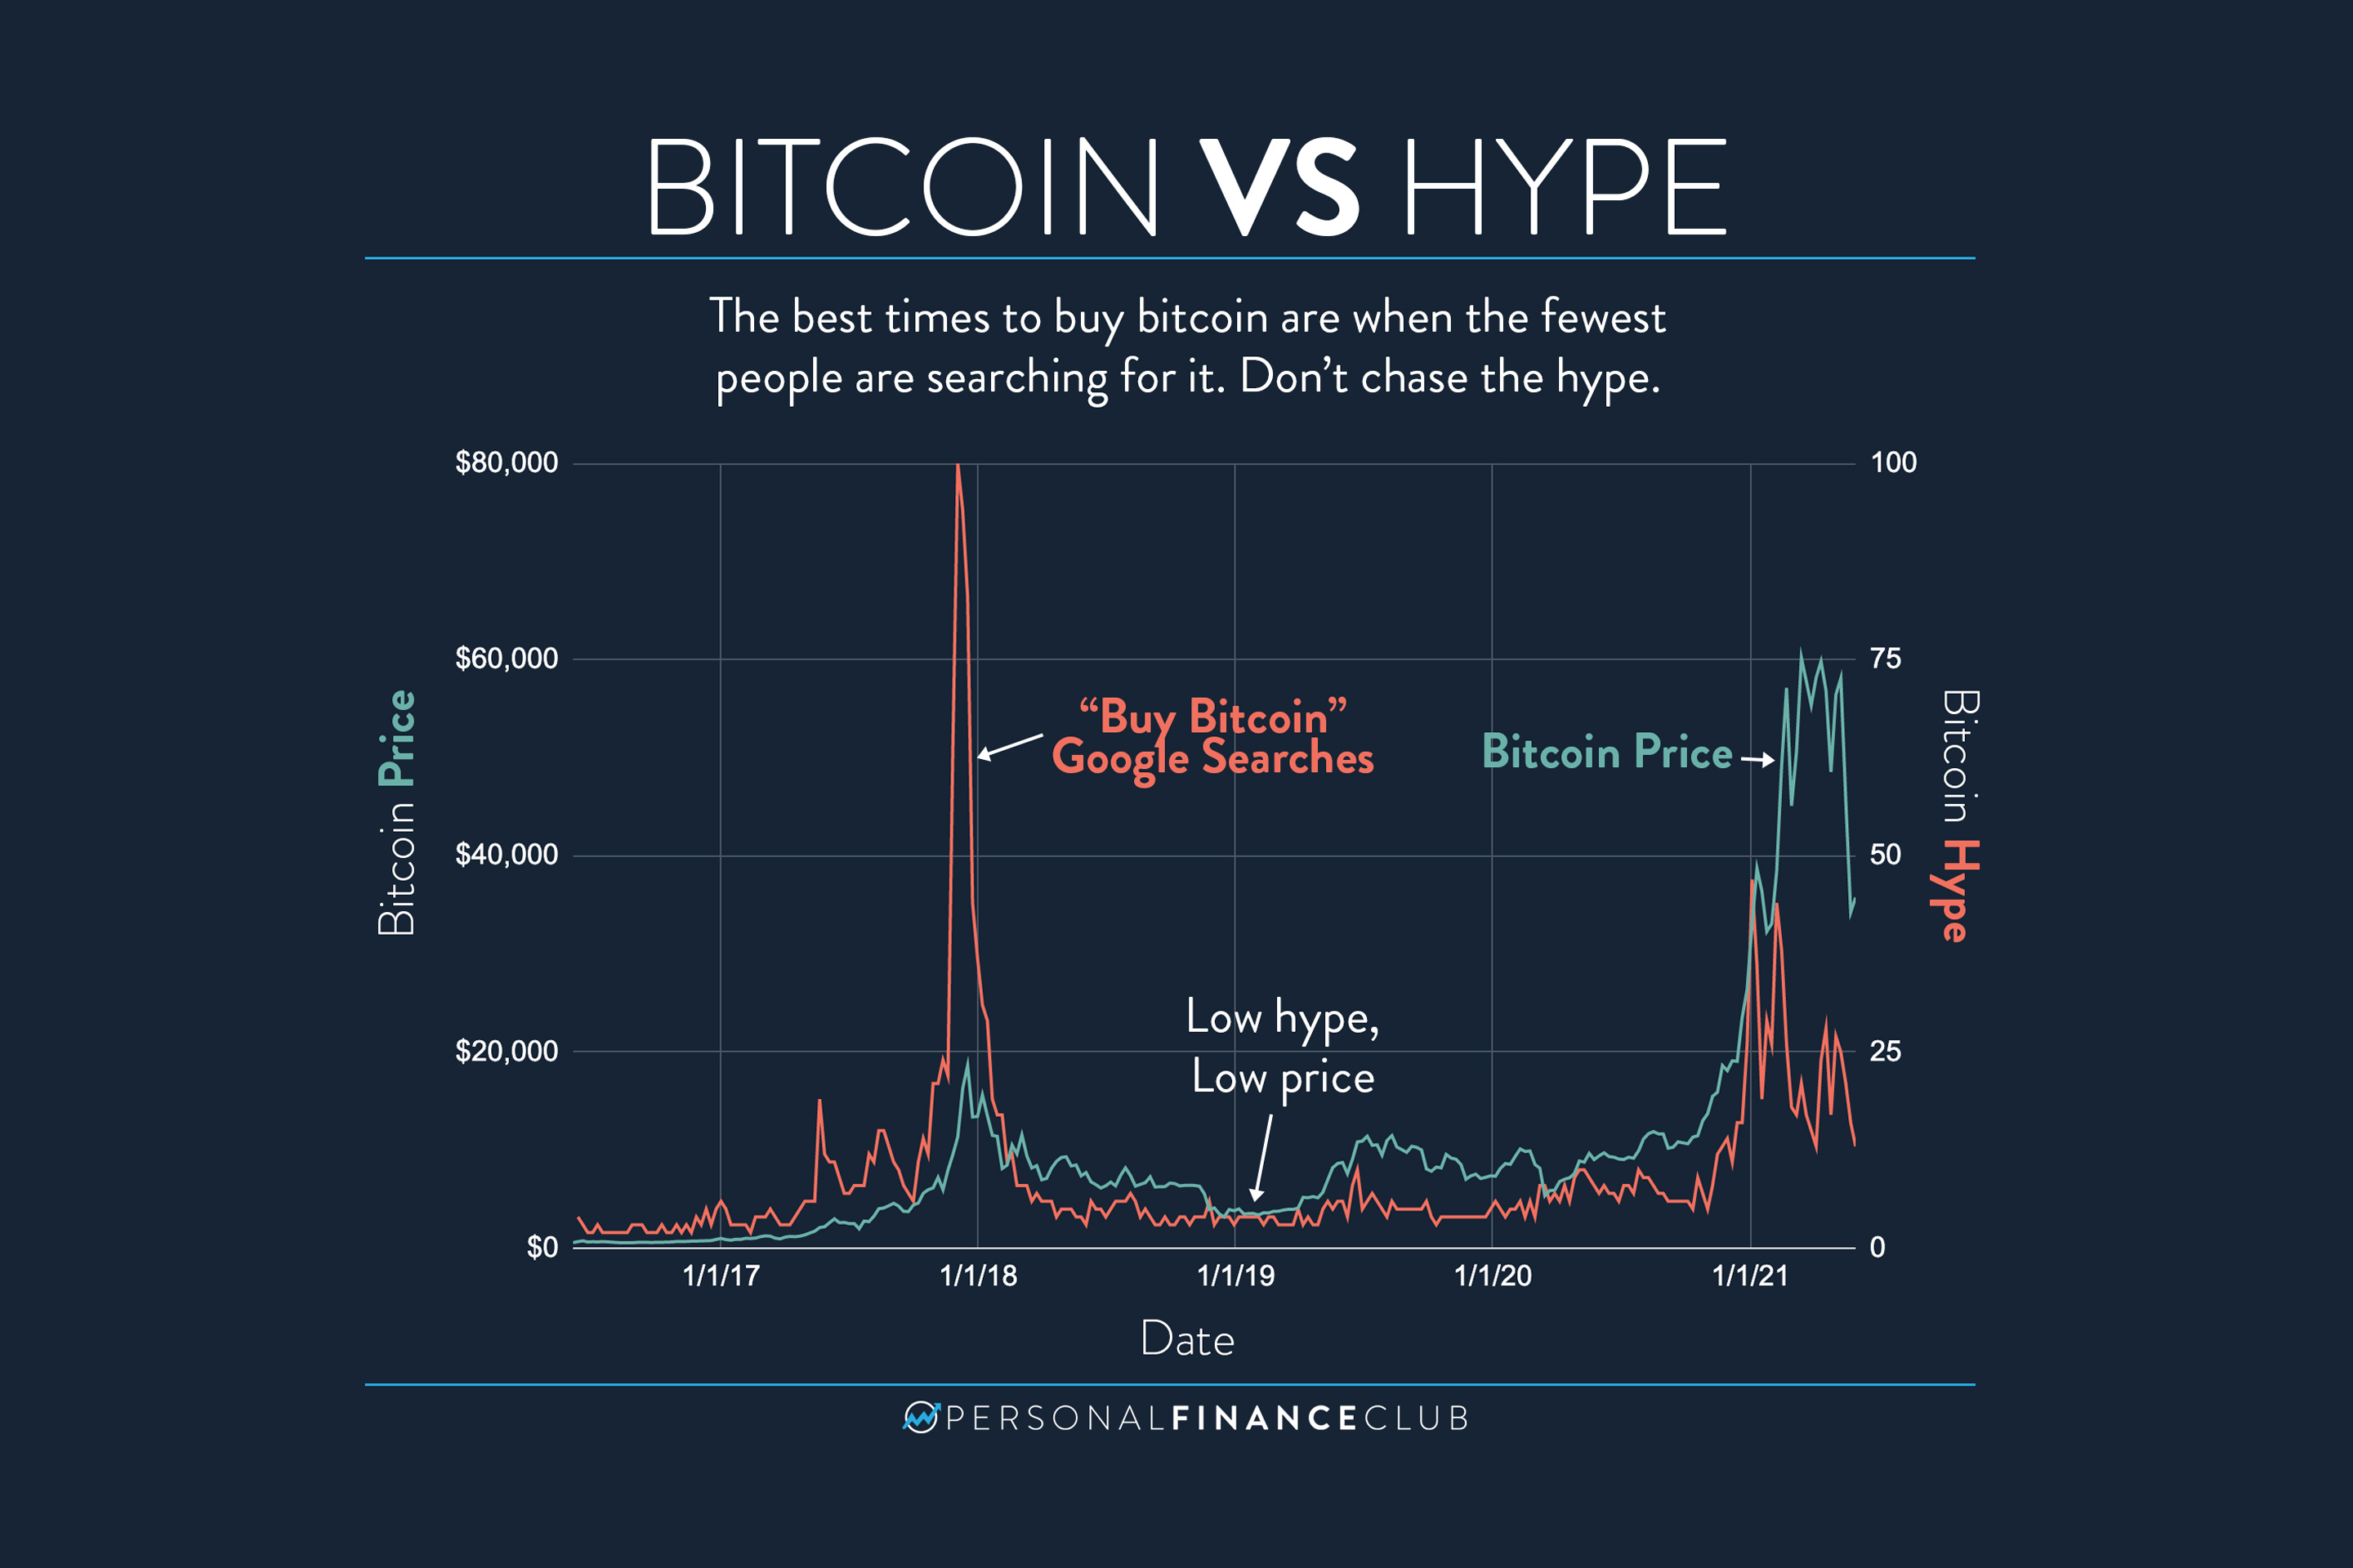 60 bits in bitcoins price